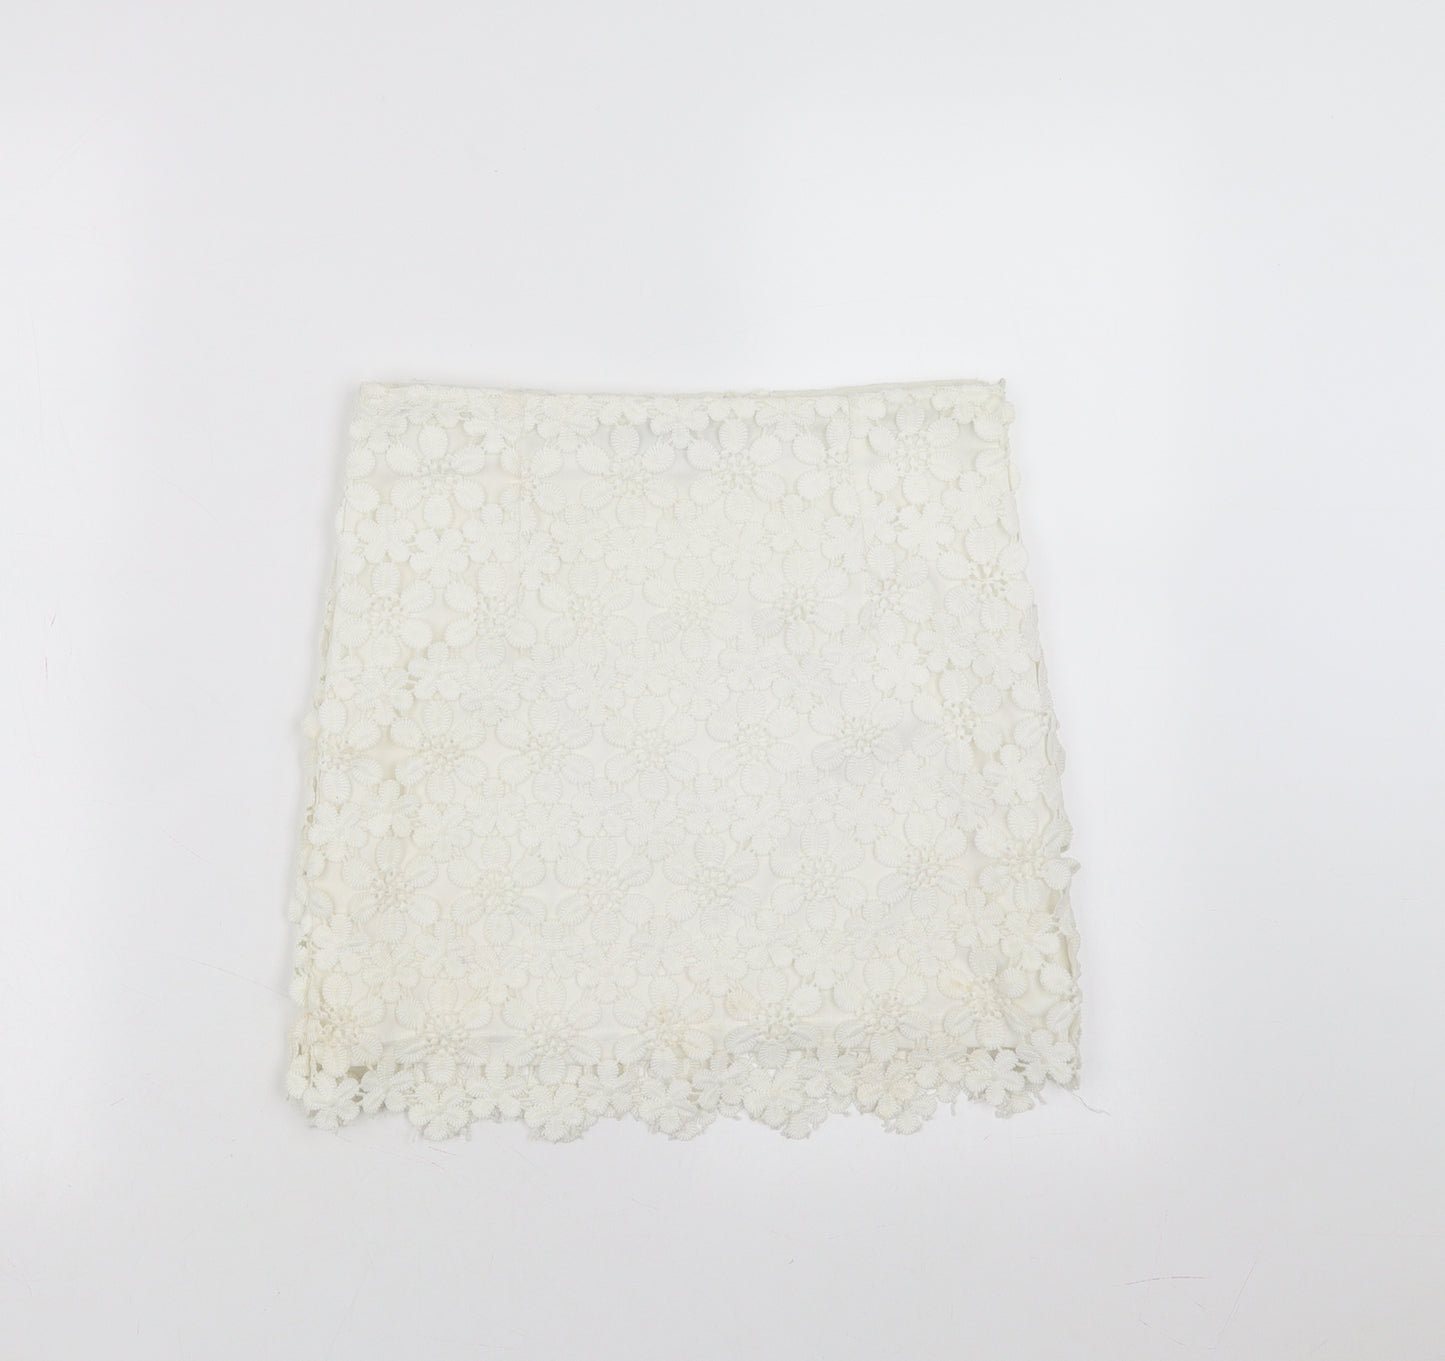 Goldie Womens White Floral  Mini Skirt Size XS  - crochet detail